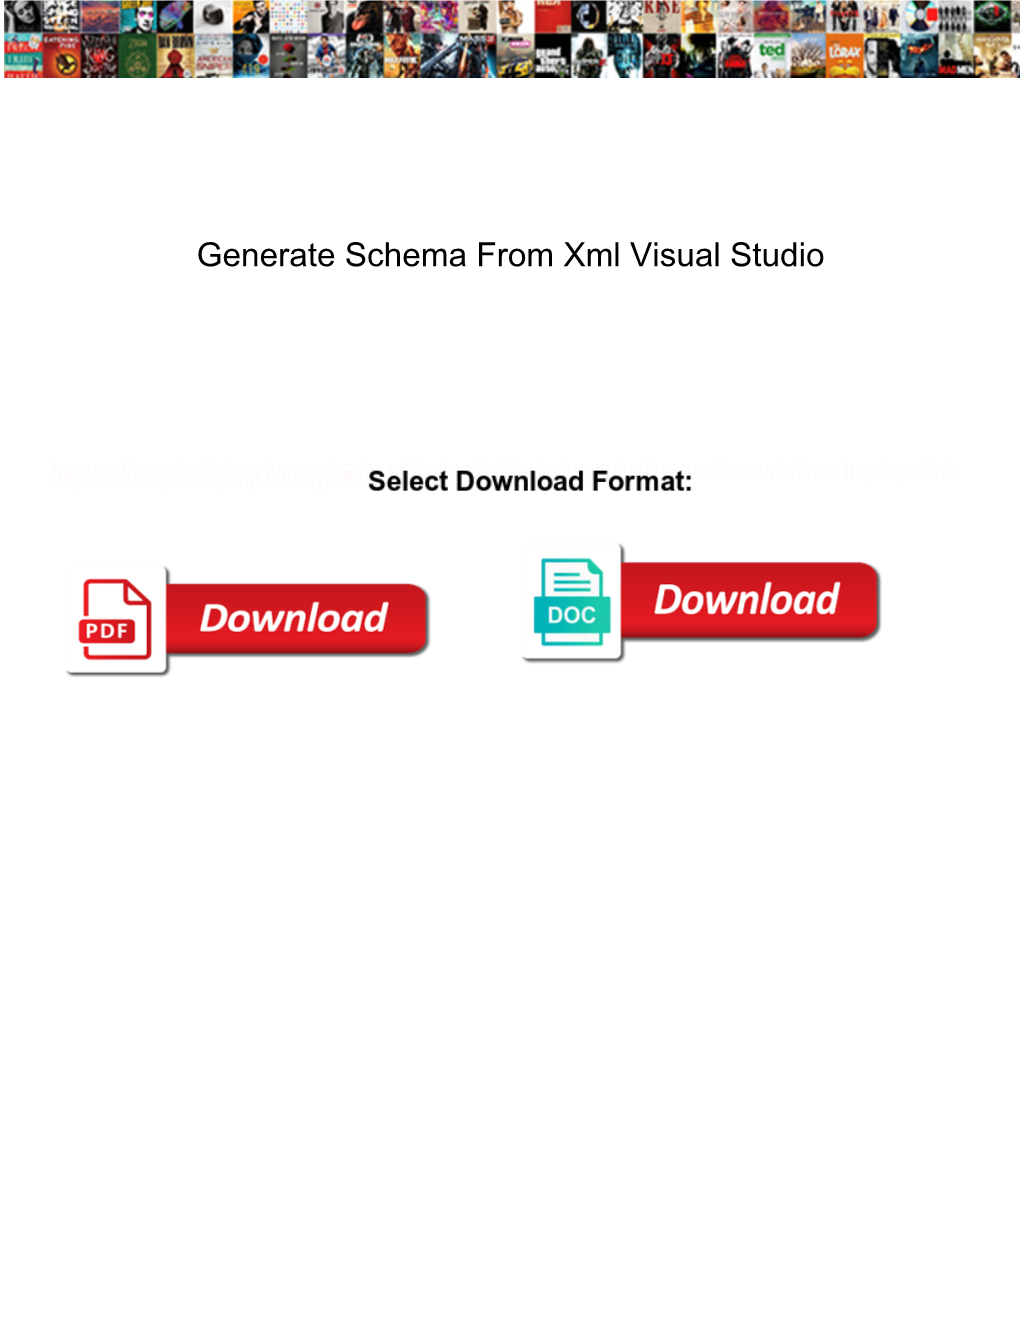 Generate Schema from Xml Visual Studio